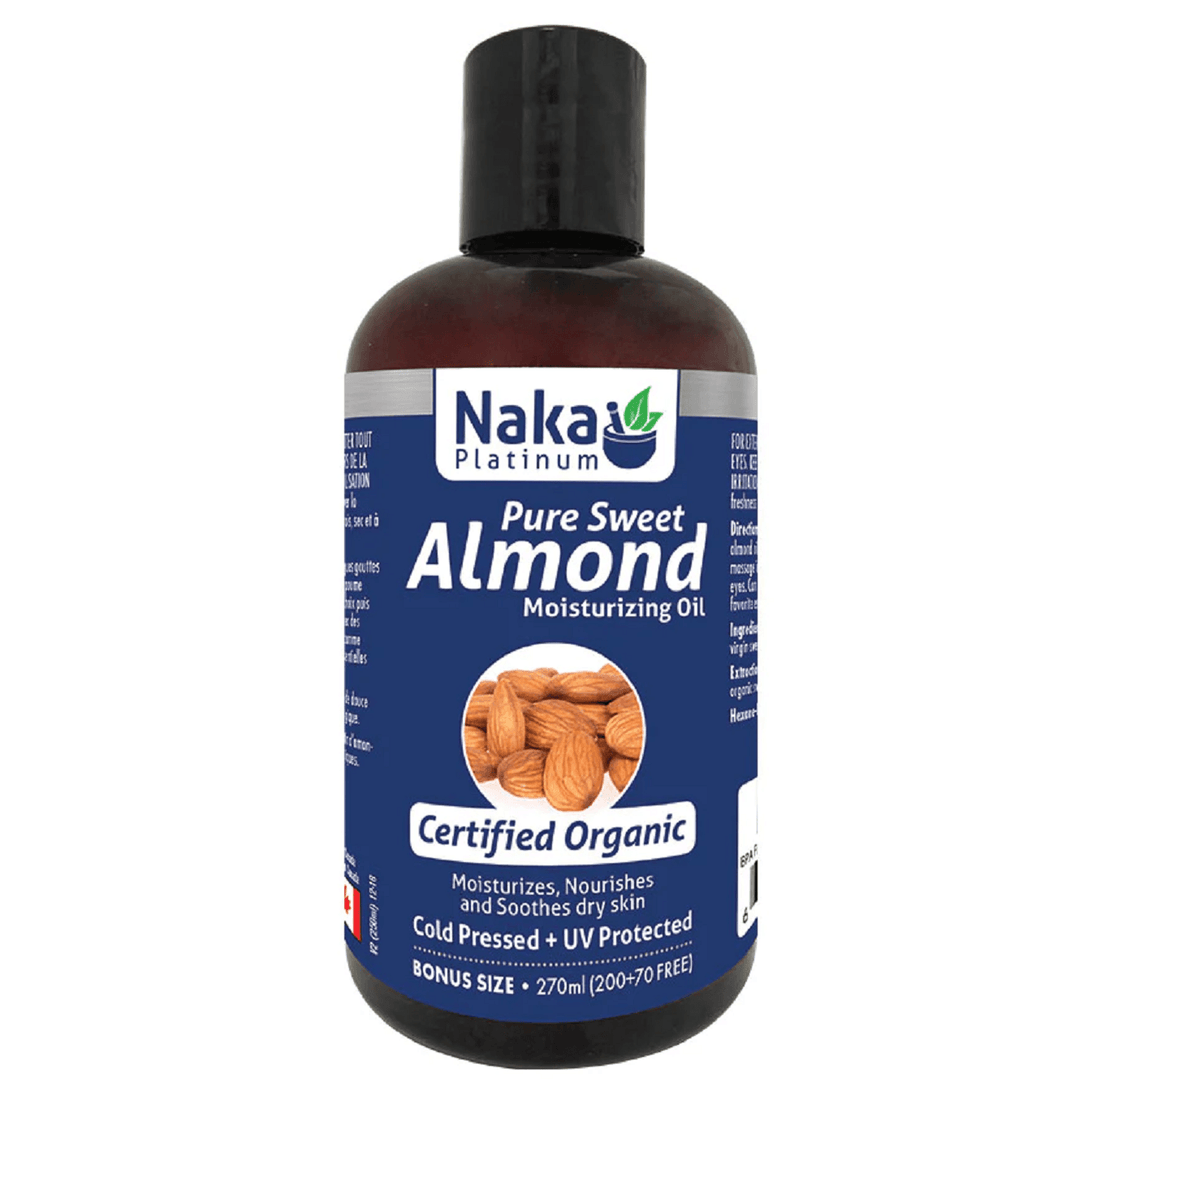 Naka Platinum Moisturizing Oil - Almond 270ml Beauty Oils at Village Vitamin Store